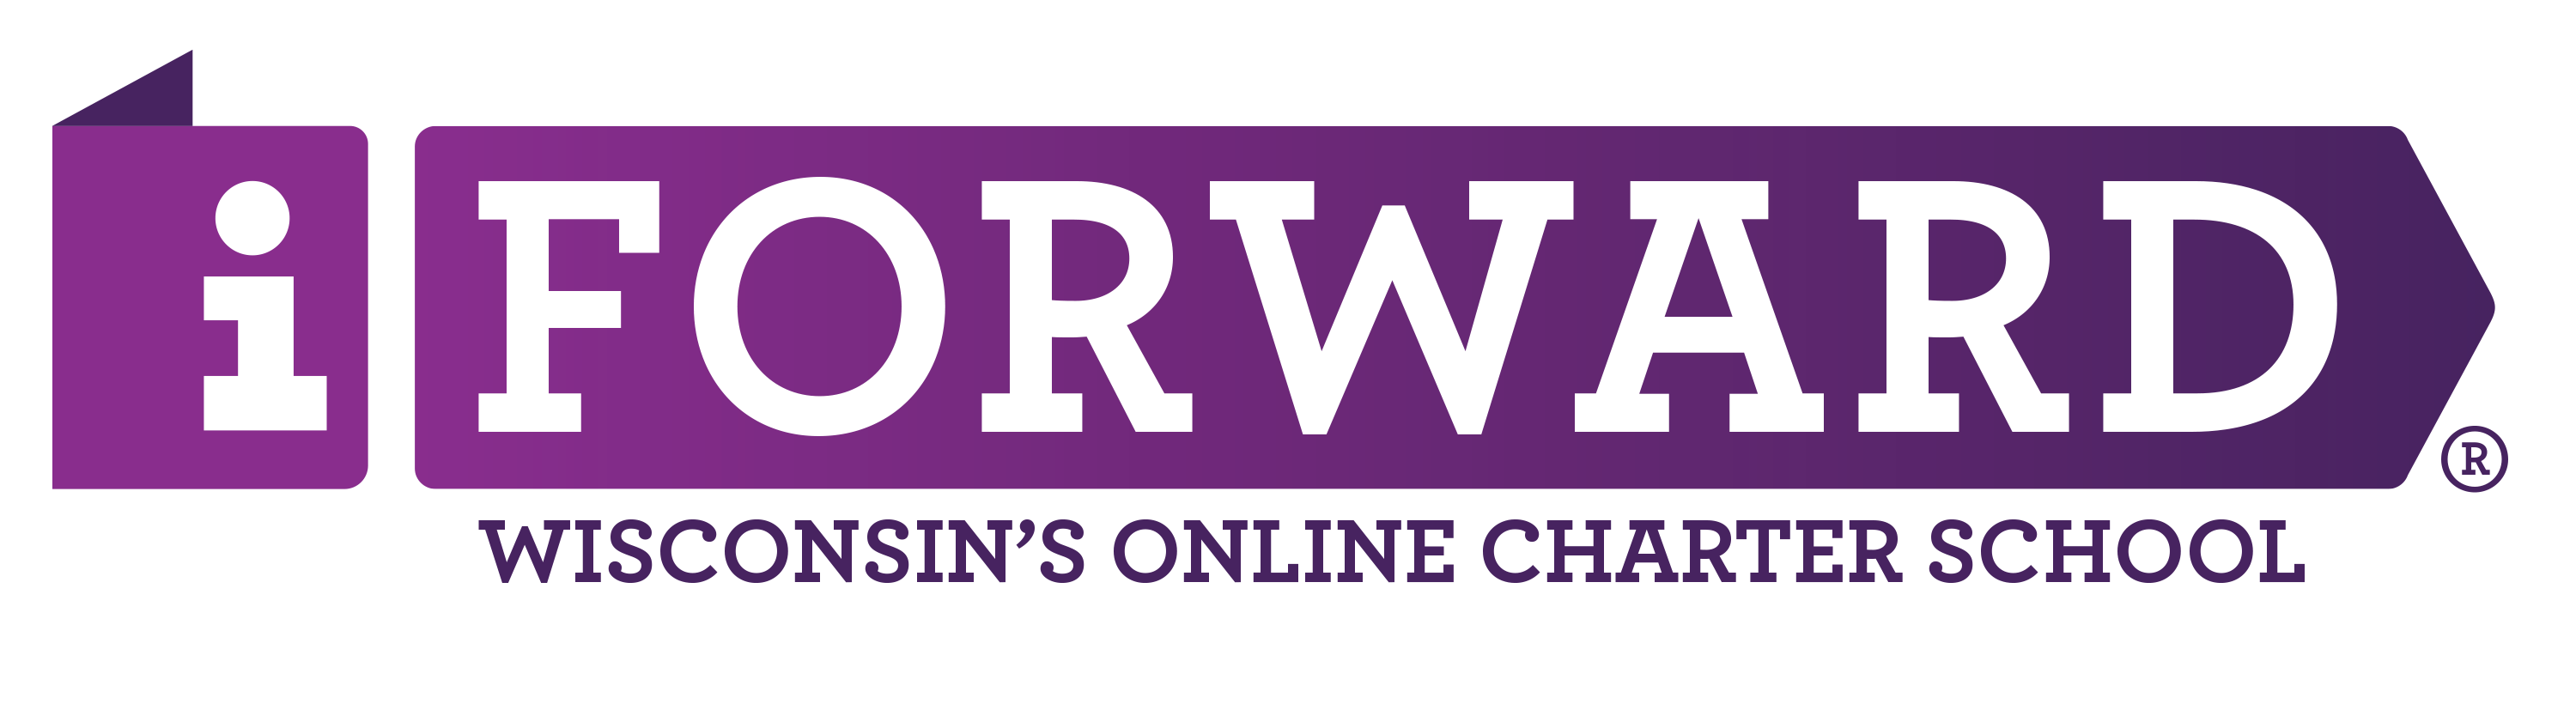 iForward logo